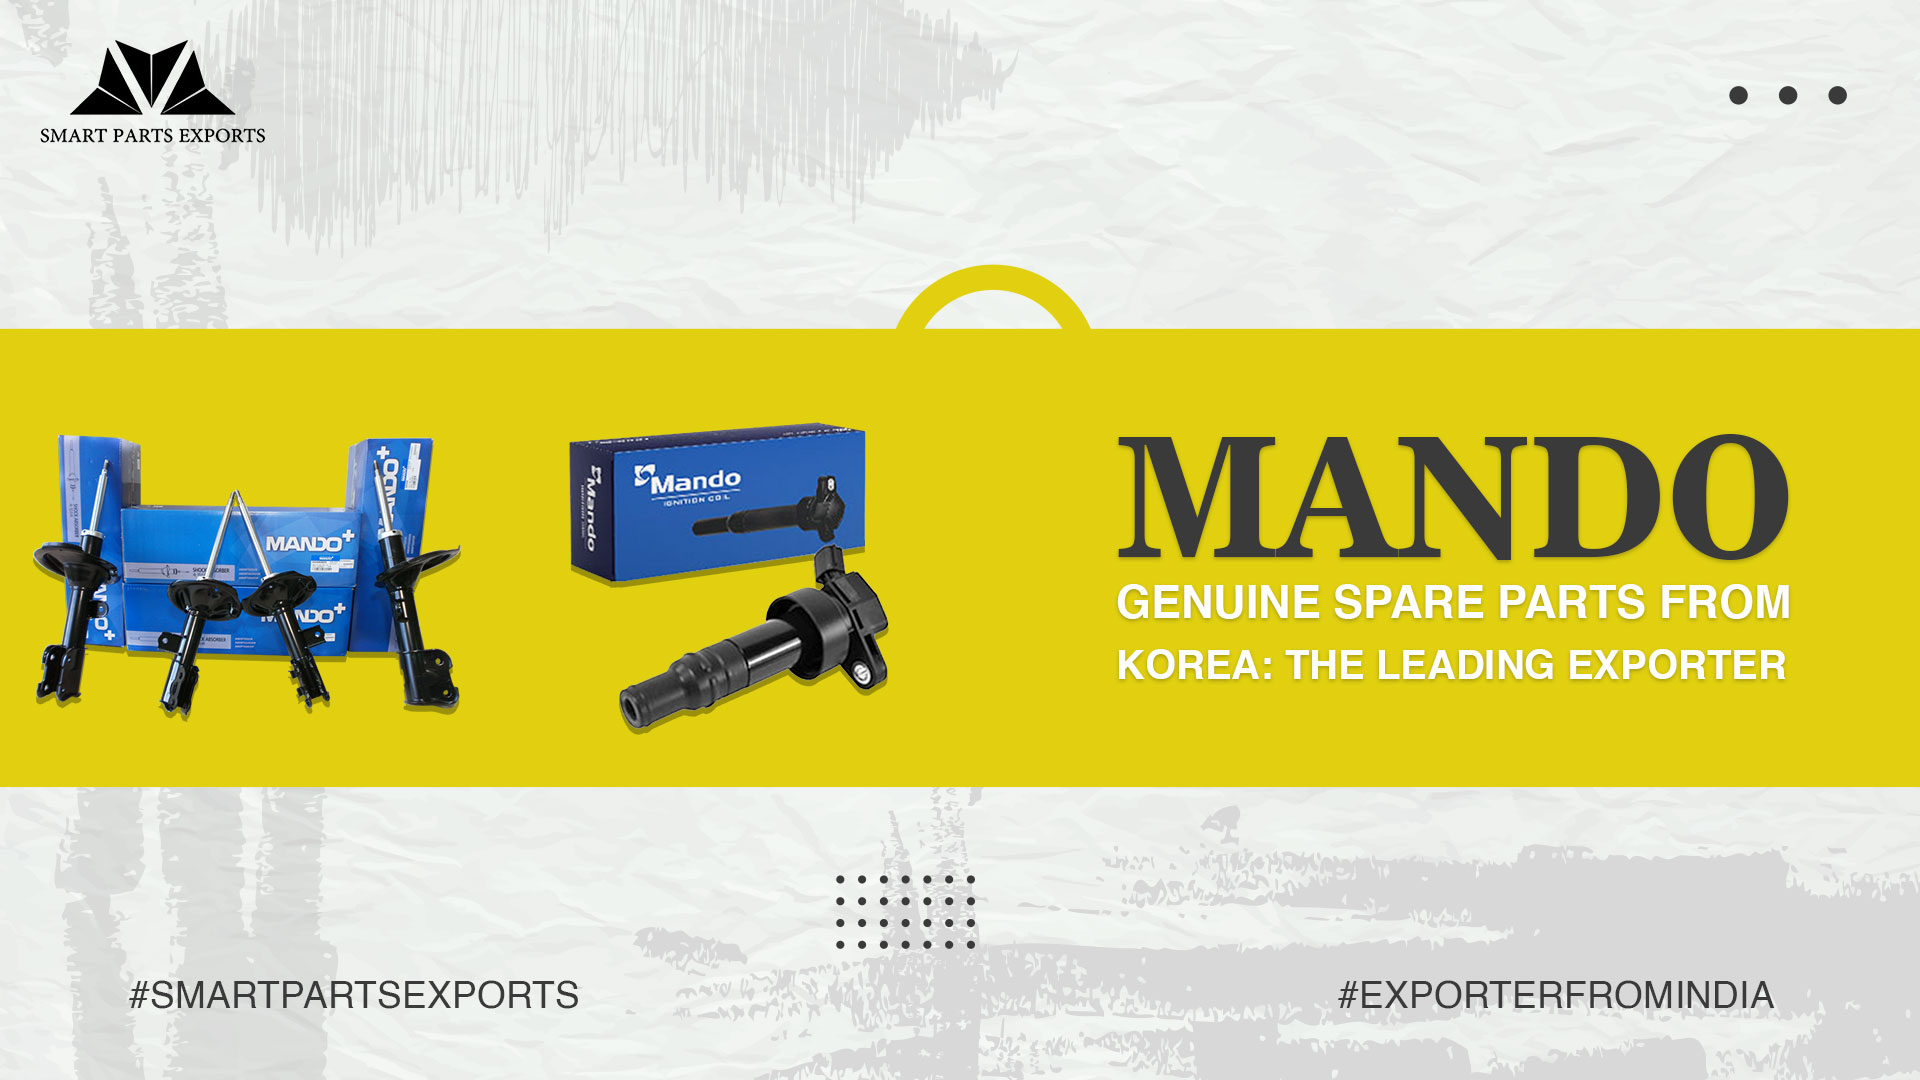 Mando Genuine Spare Parts from Korea: The Leading Exporter